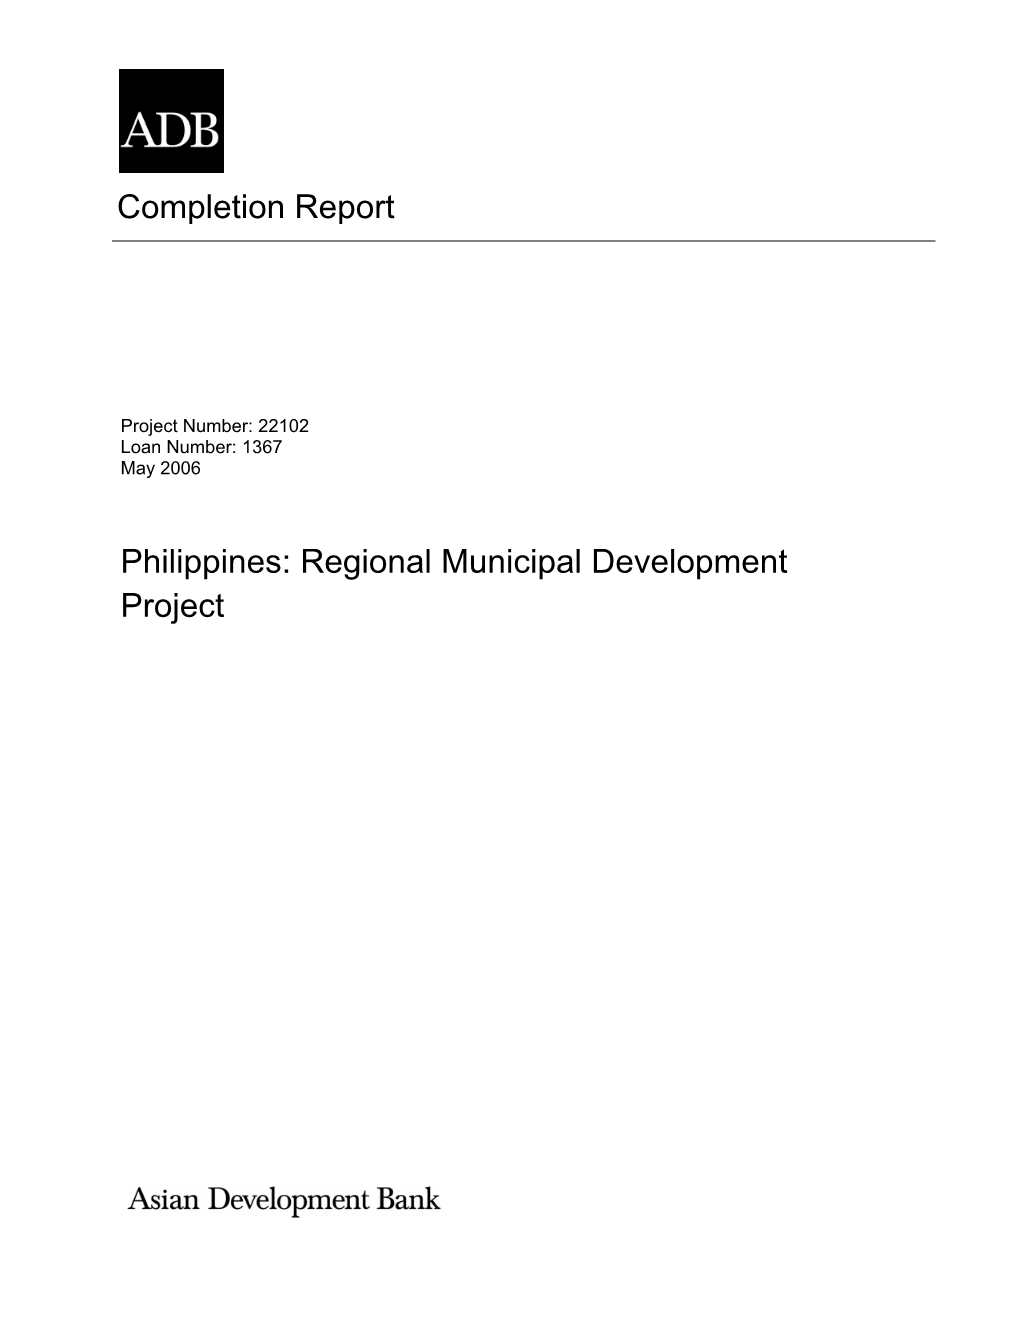 Regional Municipal Development Project